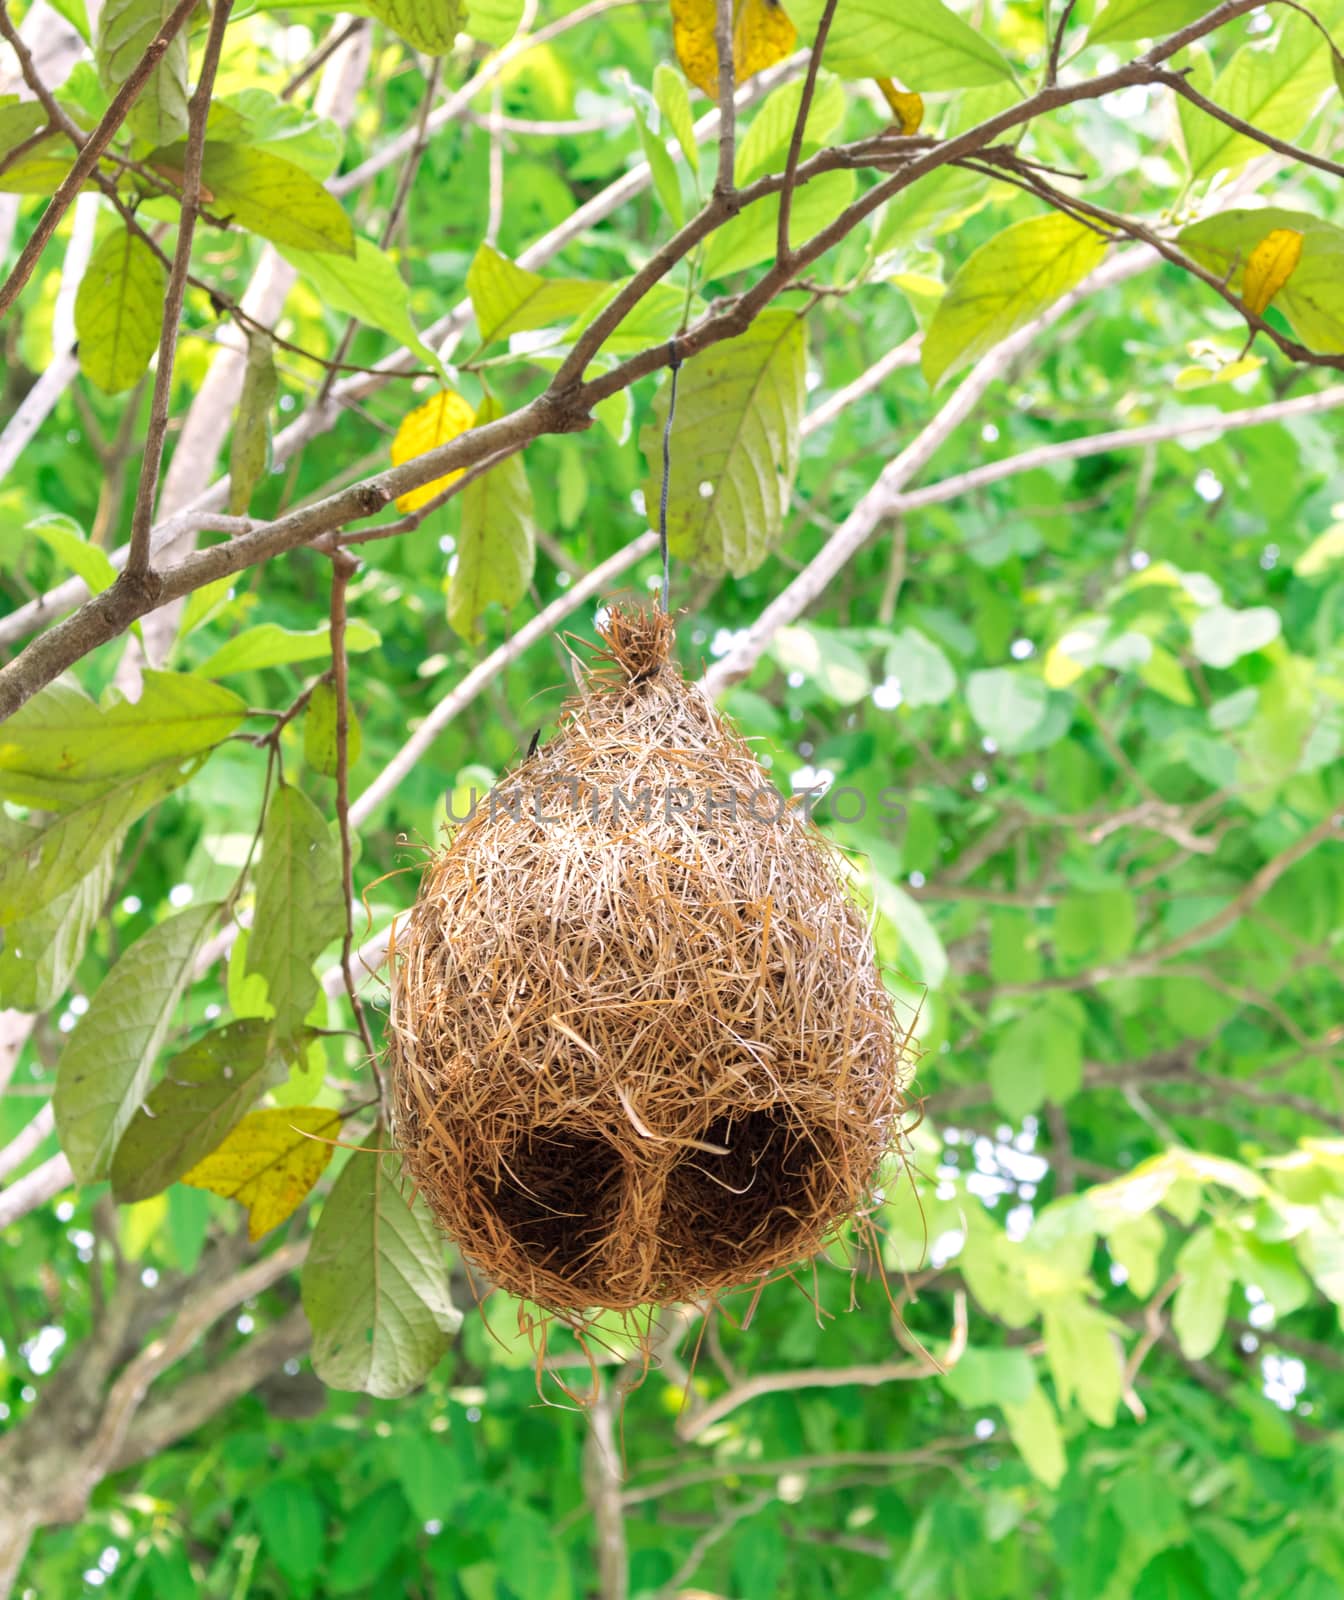 Nest on tree branch, forest nature background by pt.pongsak@gmail.com